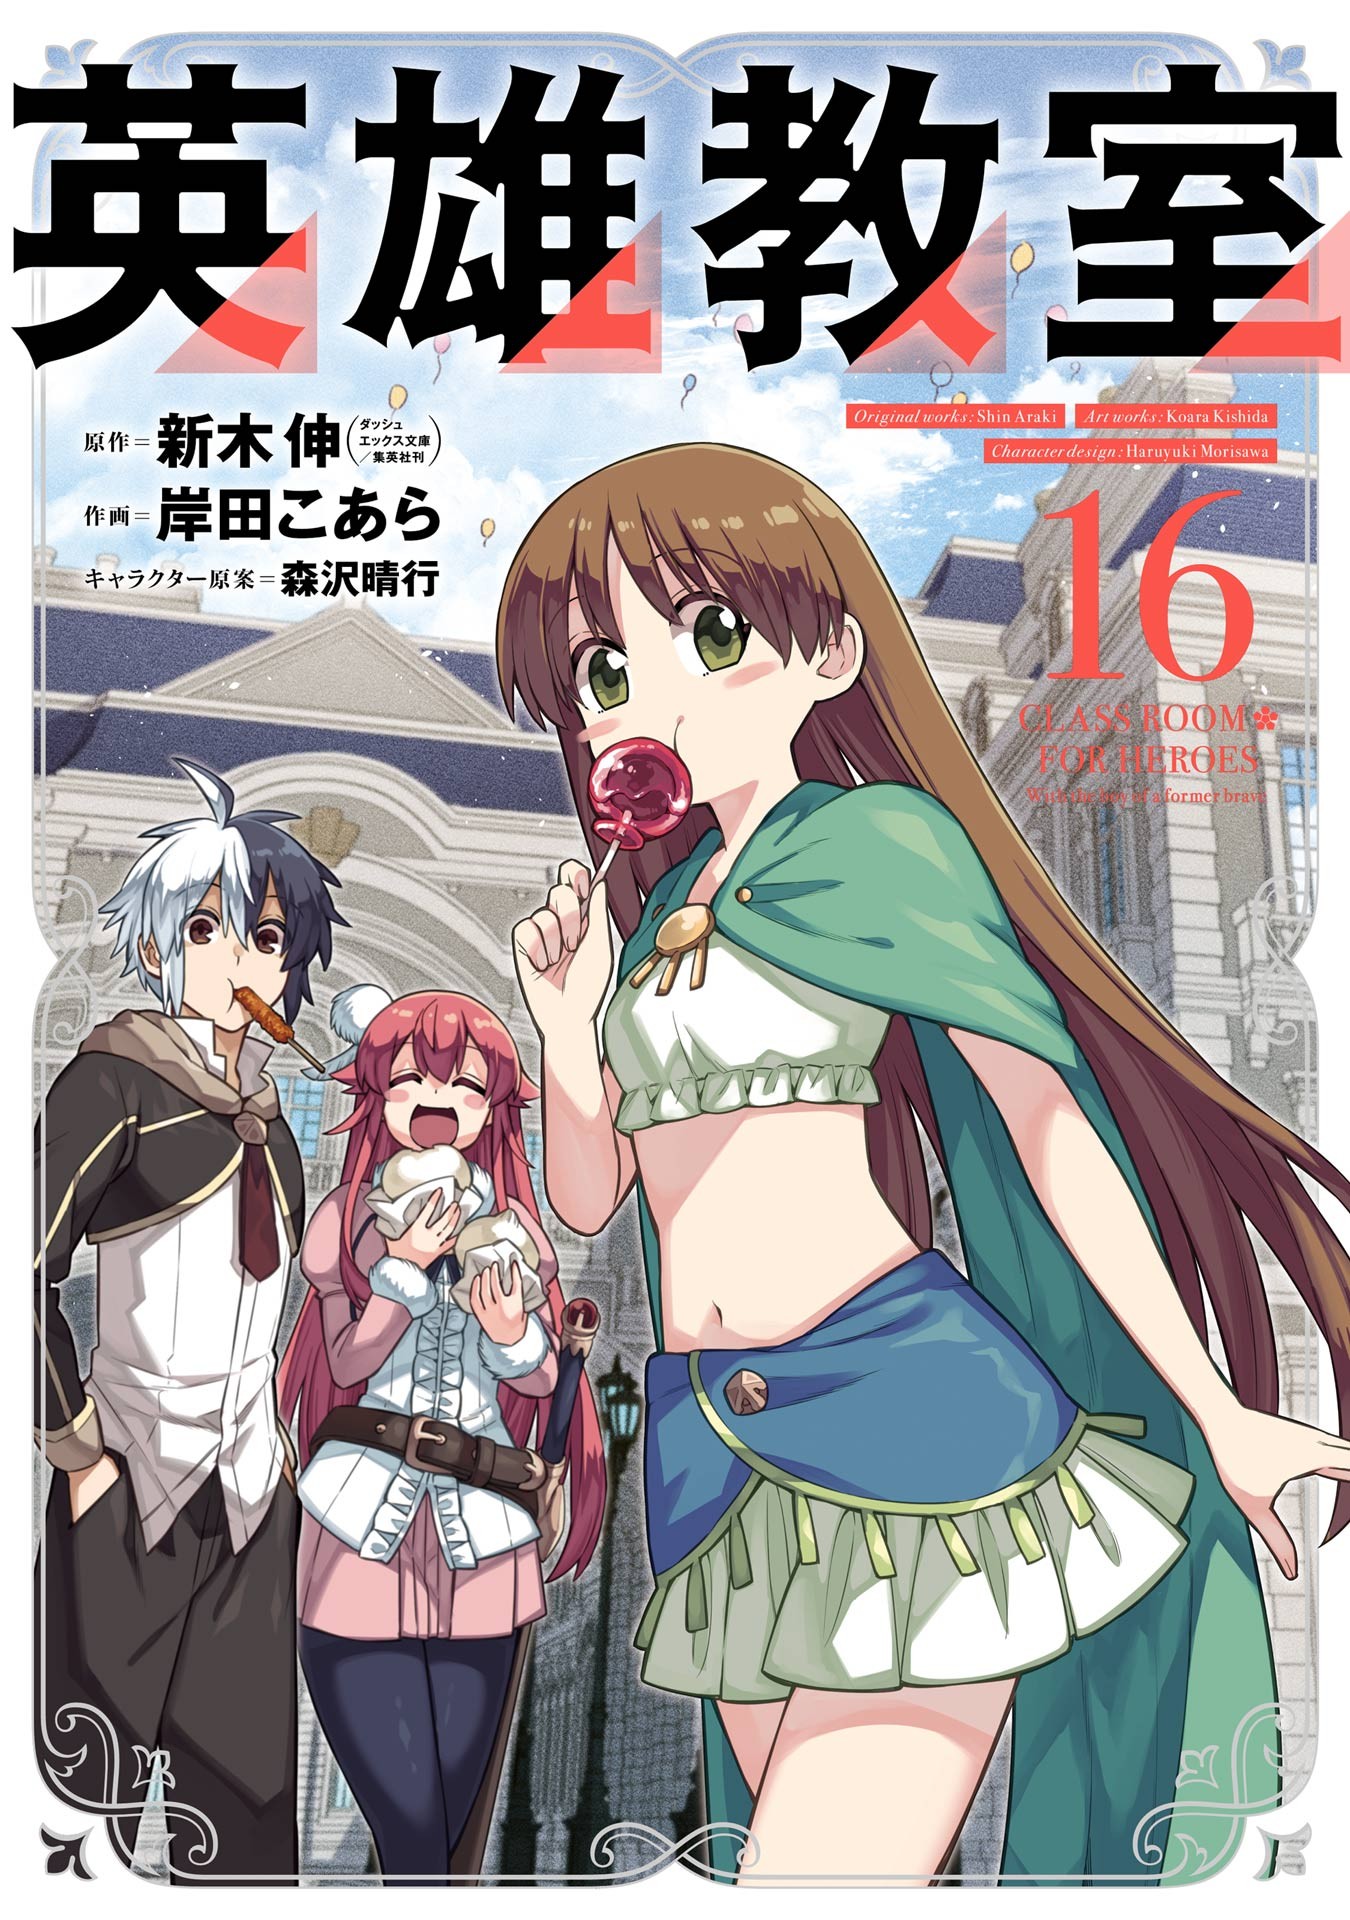 Eiyuu Kyoushitsu Light Novels Getting Anime Adaptation